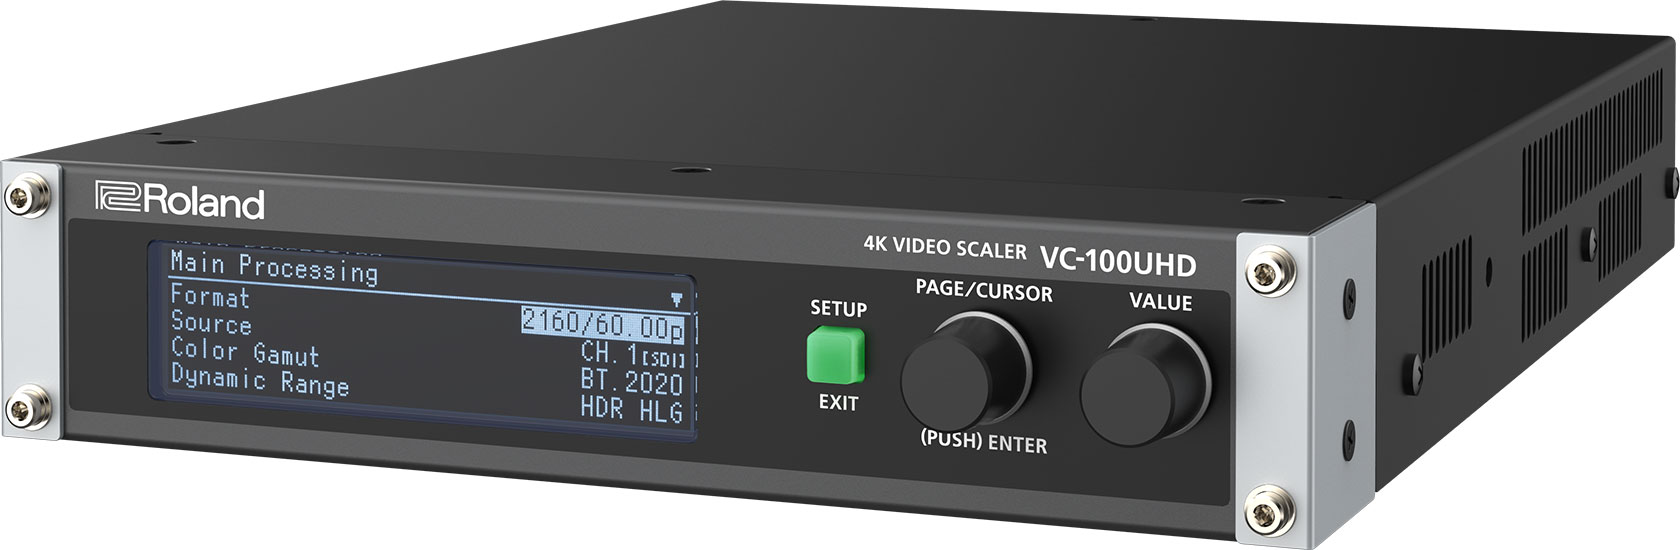 Roland VC-100UHD - 4K Video Scaler